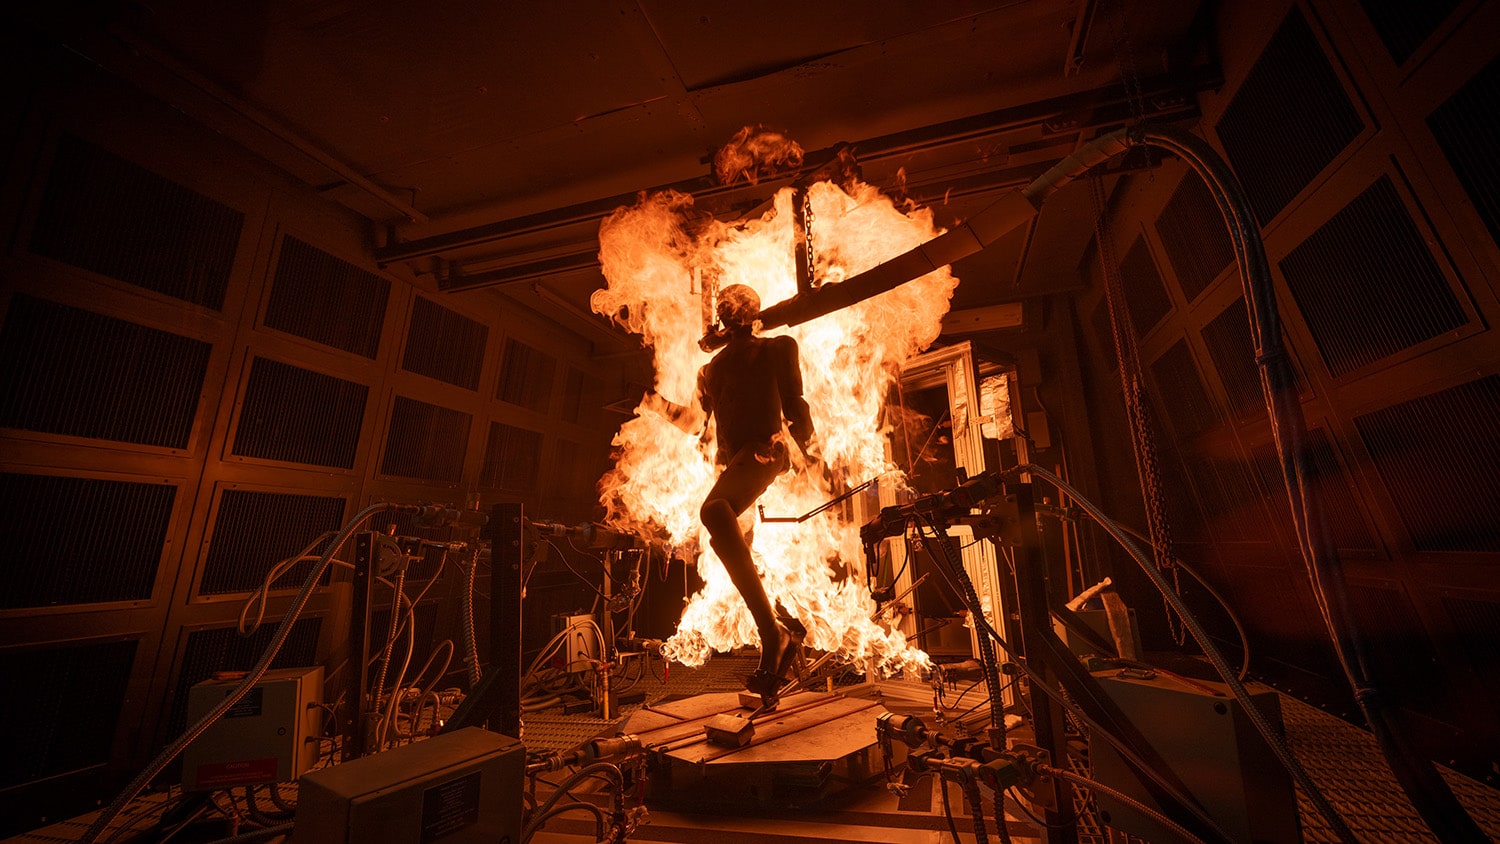 Inside a testing lab, a human-sized manikin moves inside flames.